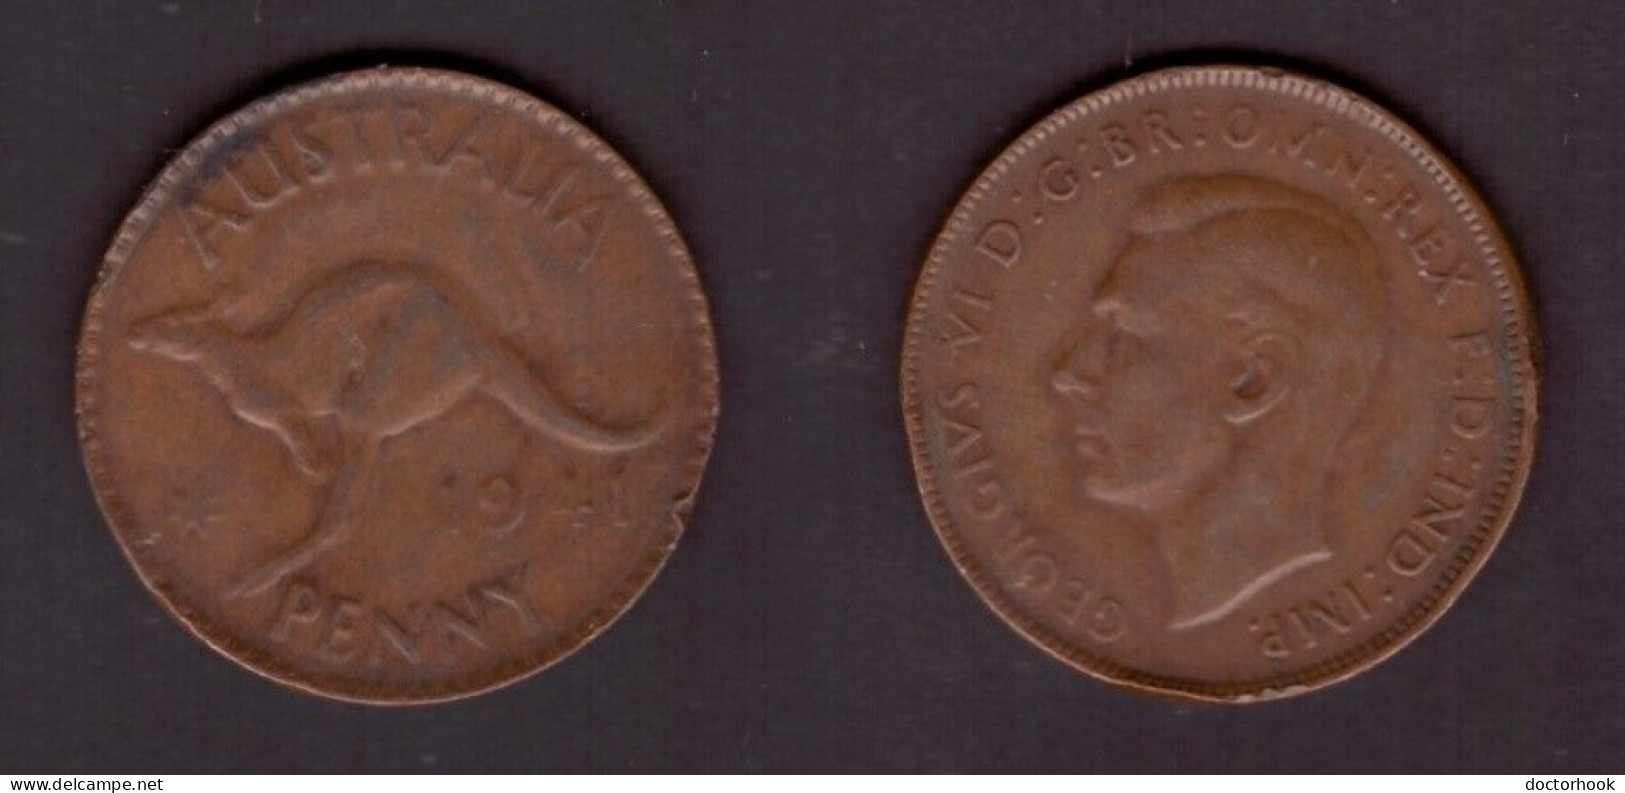 AUSTRALIA   1 PENNY 1941 (KM # 36) #7378 - Penny